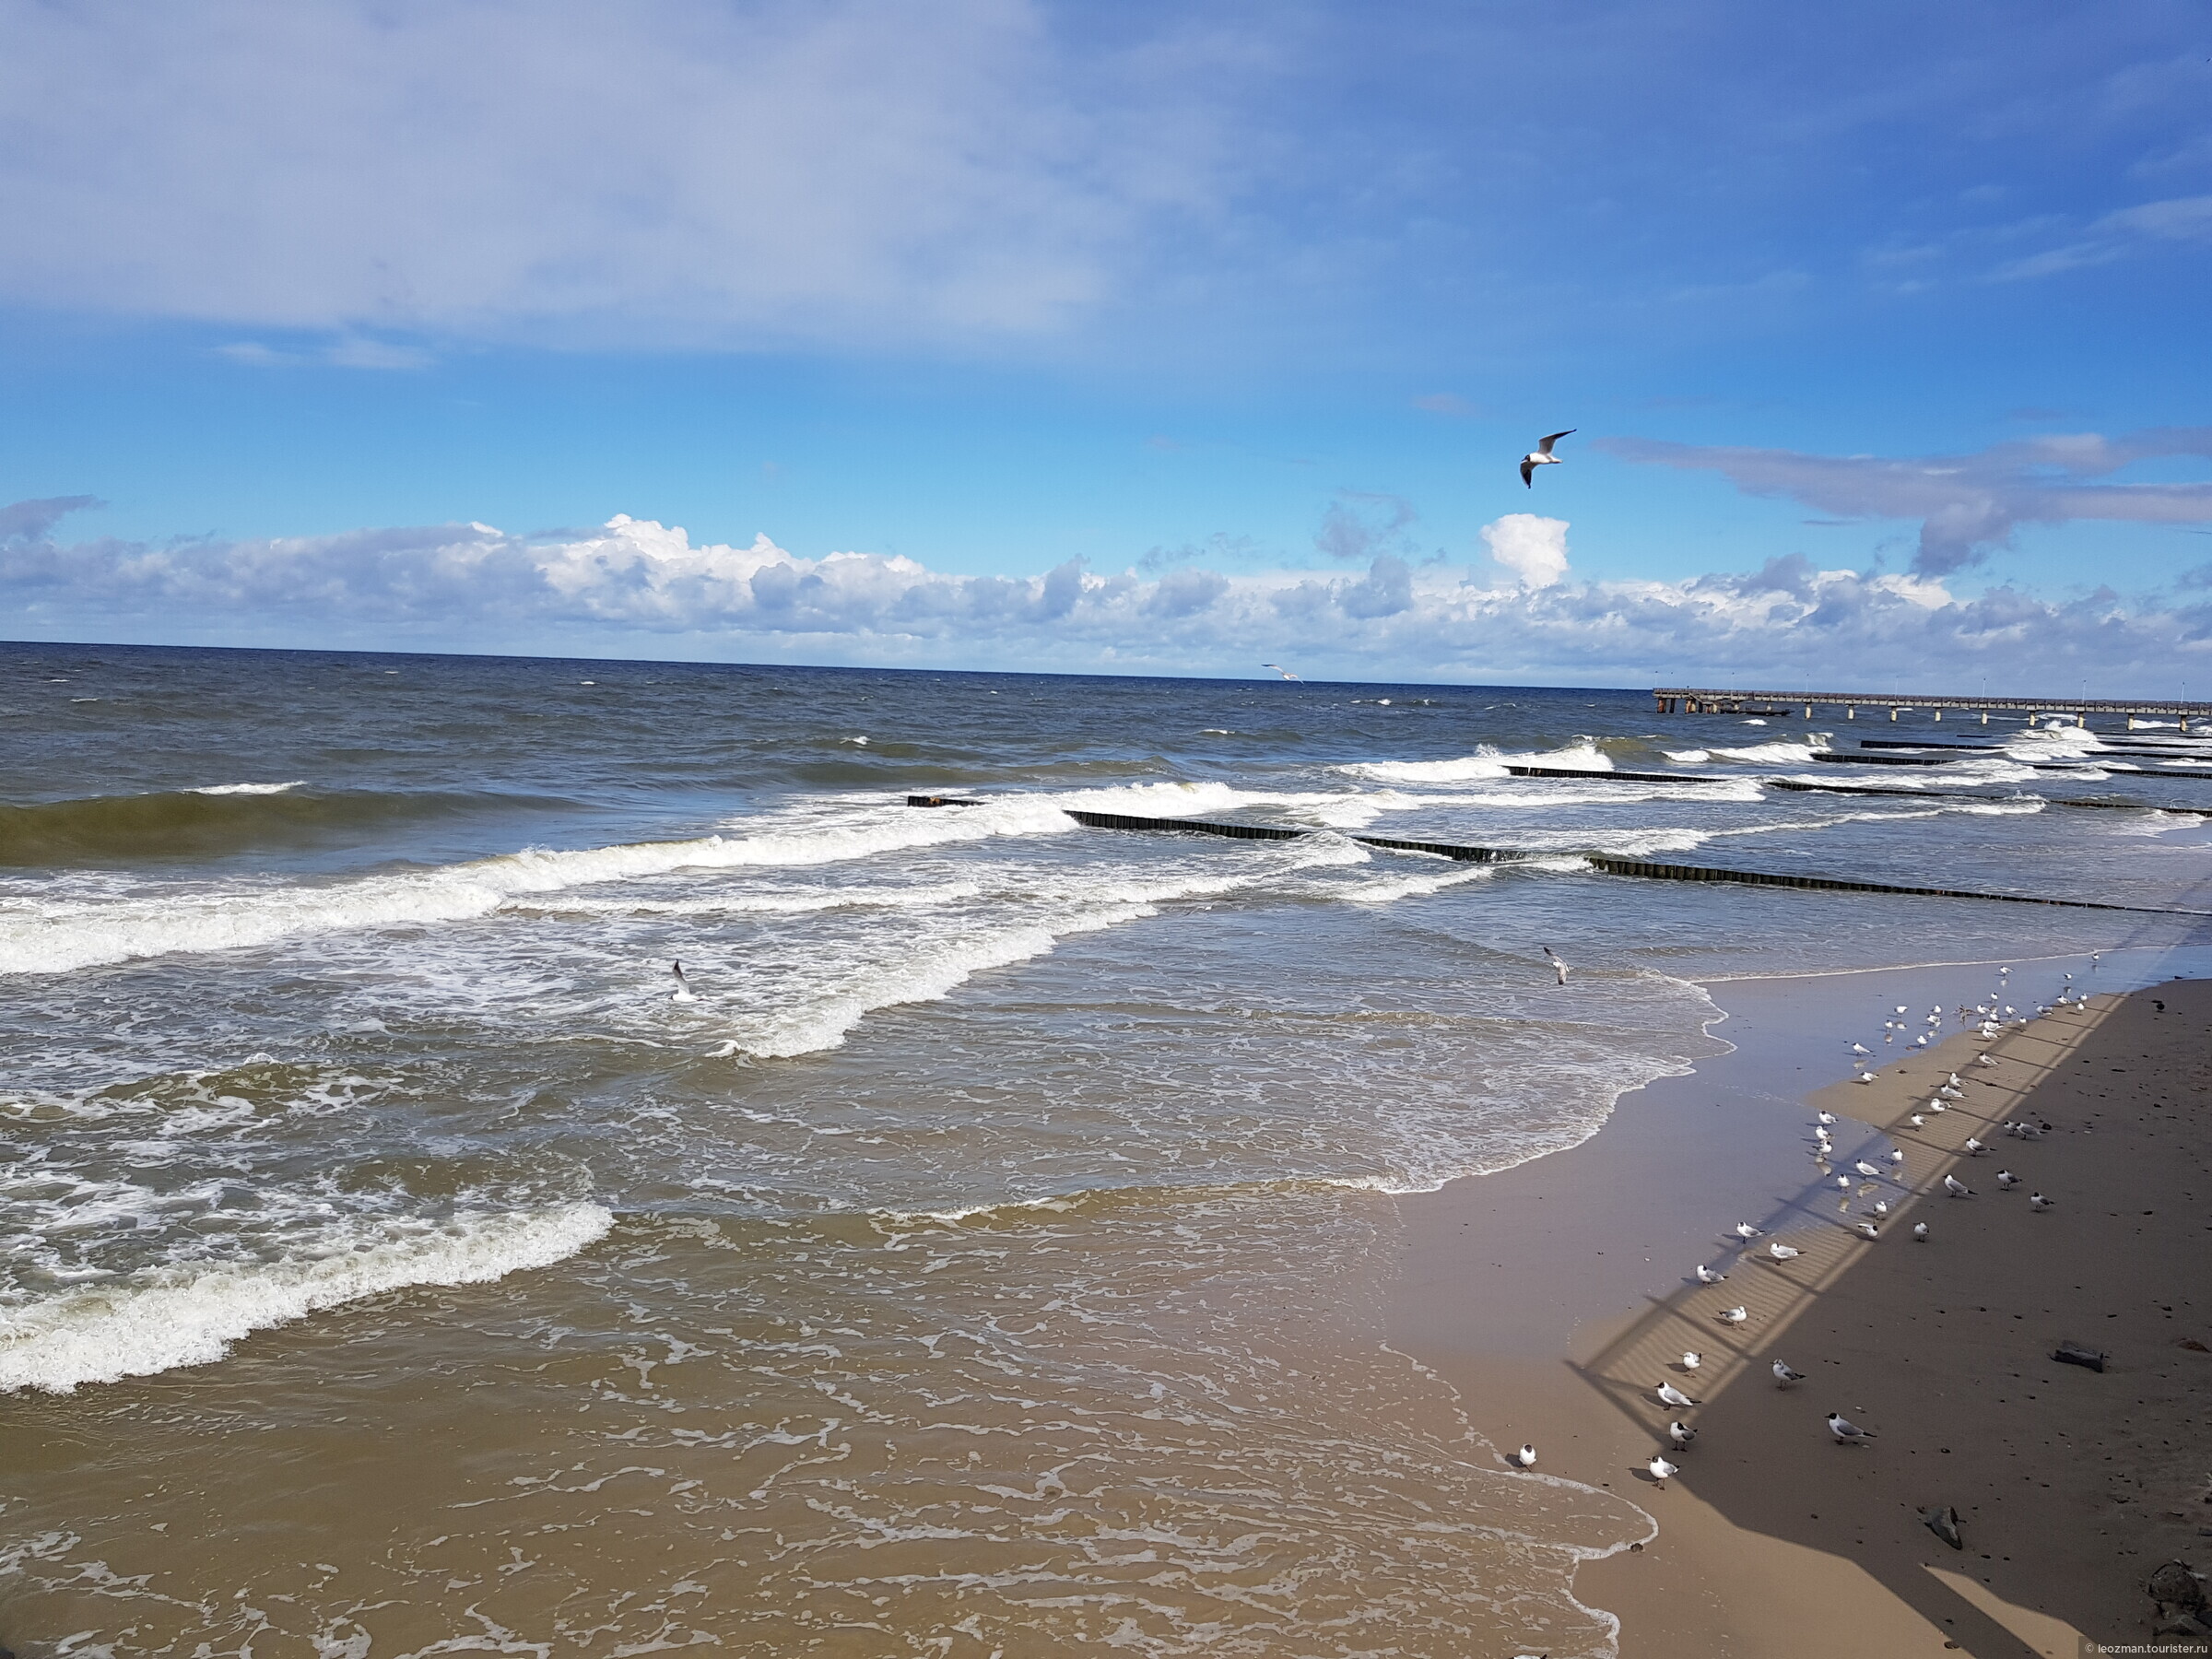 Море в зеленоградске сейчас. Балтийское море Зеленоградск. Зеленоградск море Куршская коса променад. Балтийское море пляж Зеленоградск. Балтийское море Зеленоградск променад.